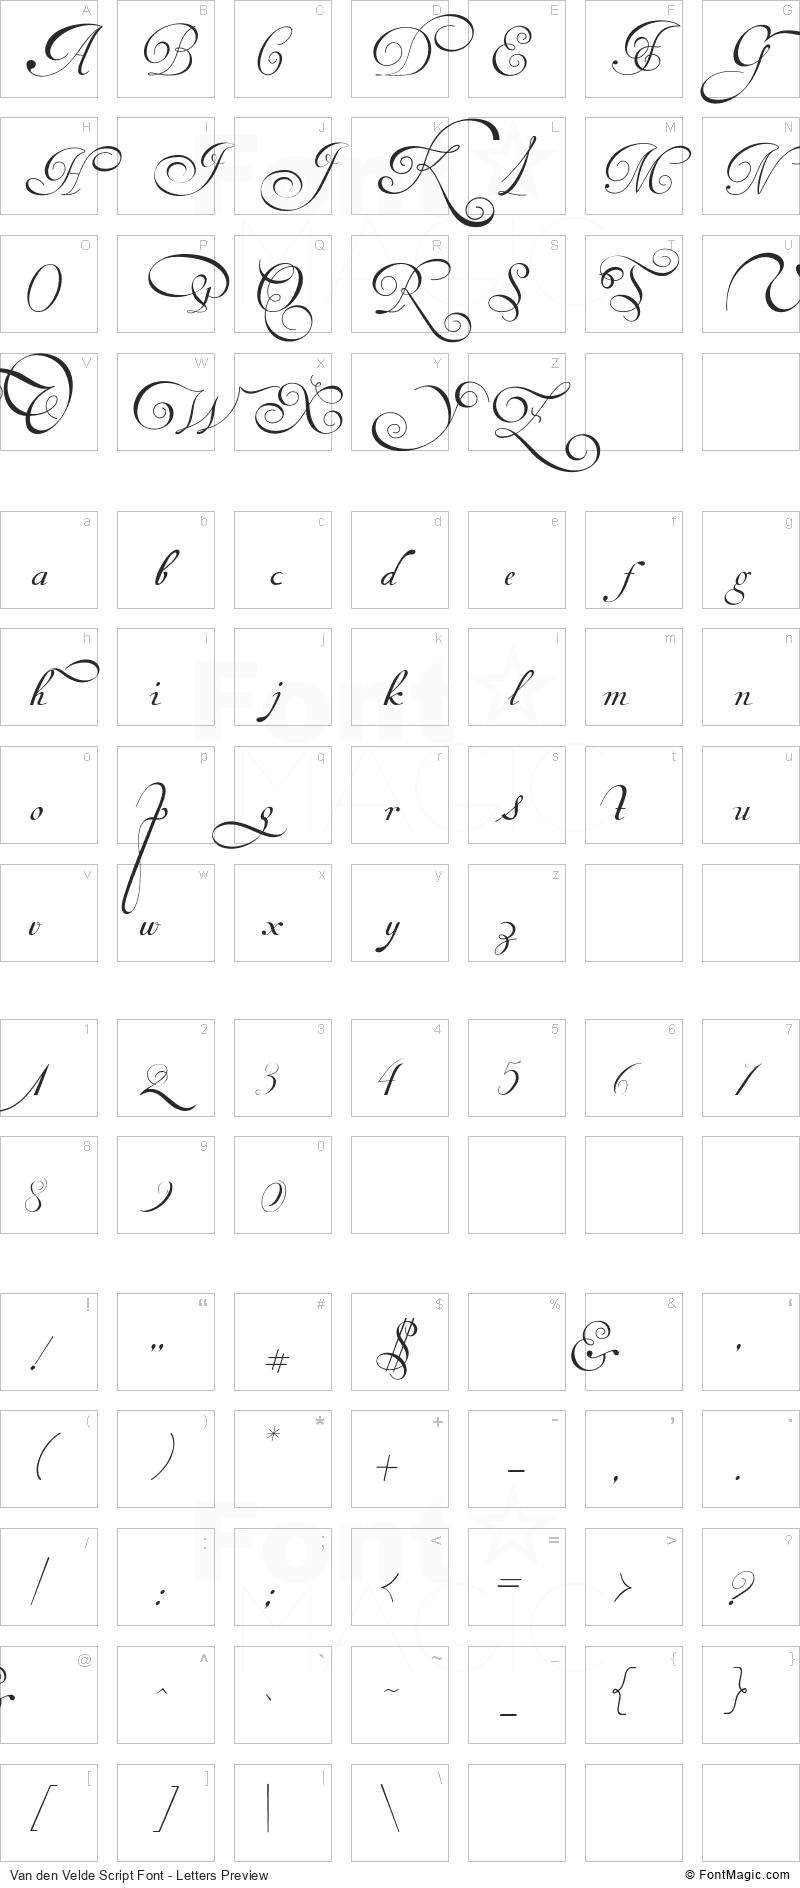 Van den Velde Script Font - All Latters Preview Chart